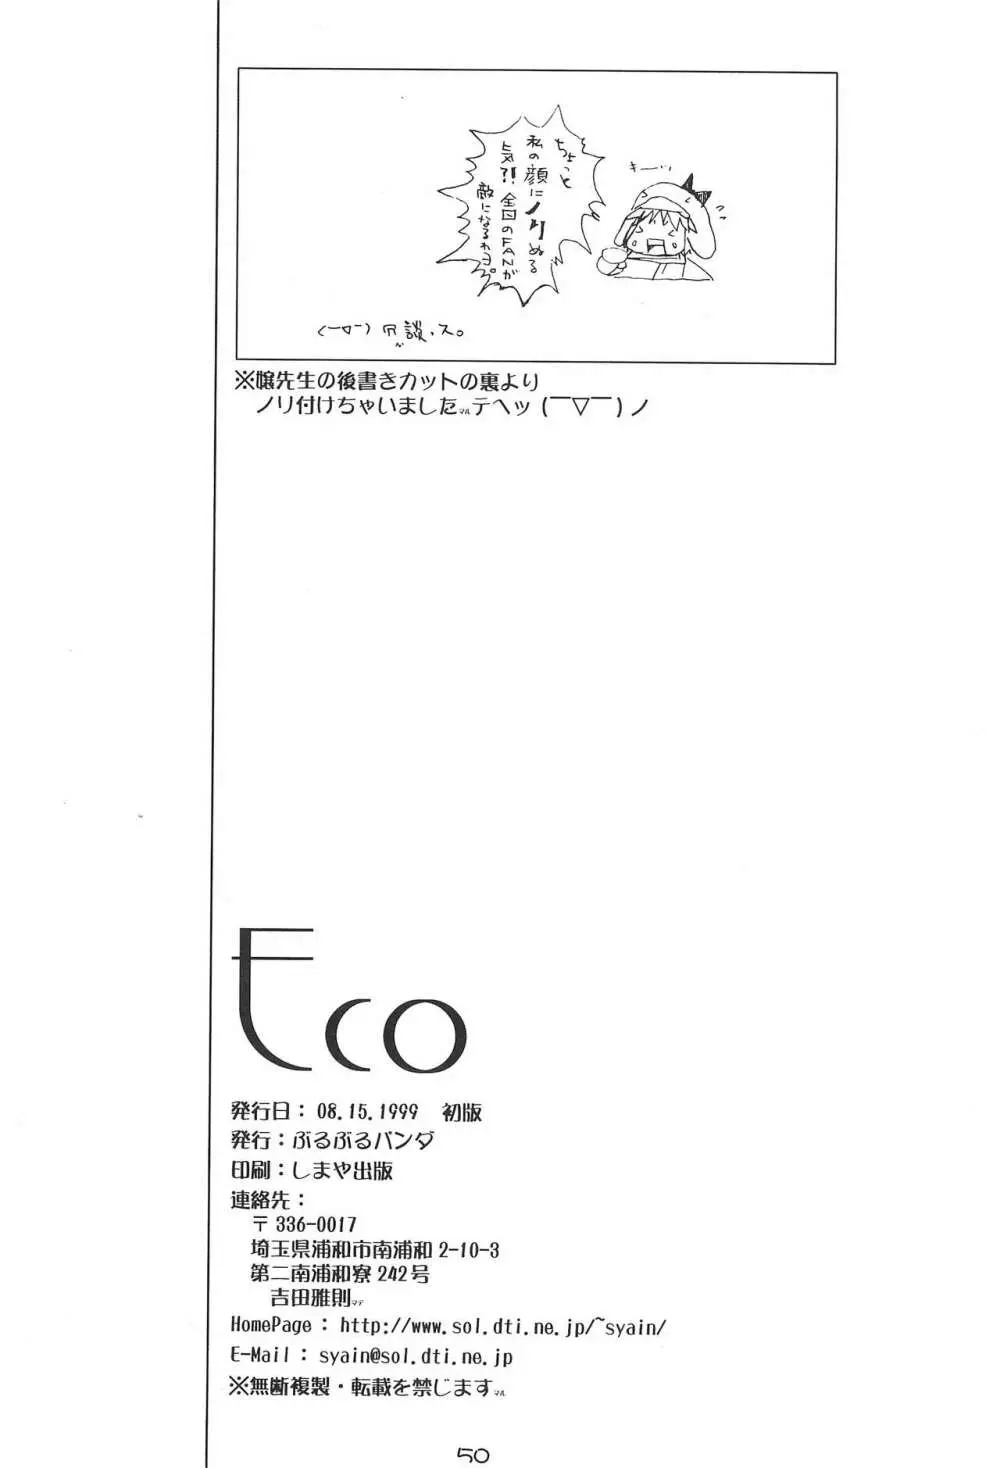 ECO 50ページ